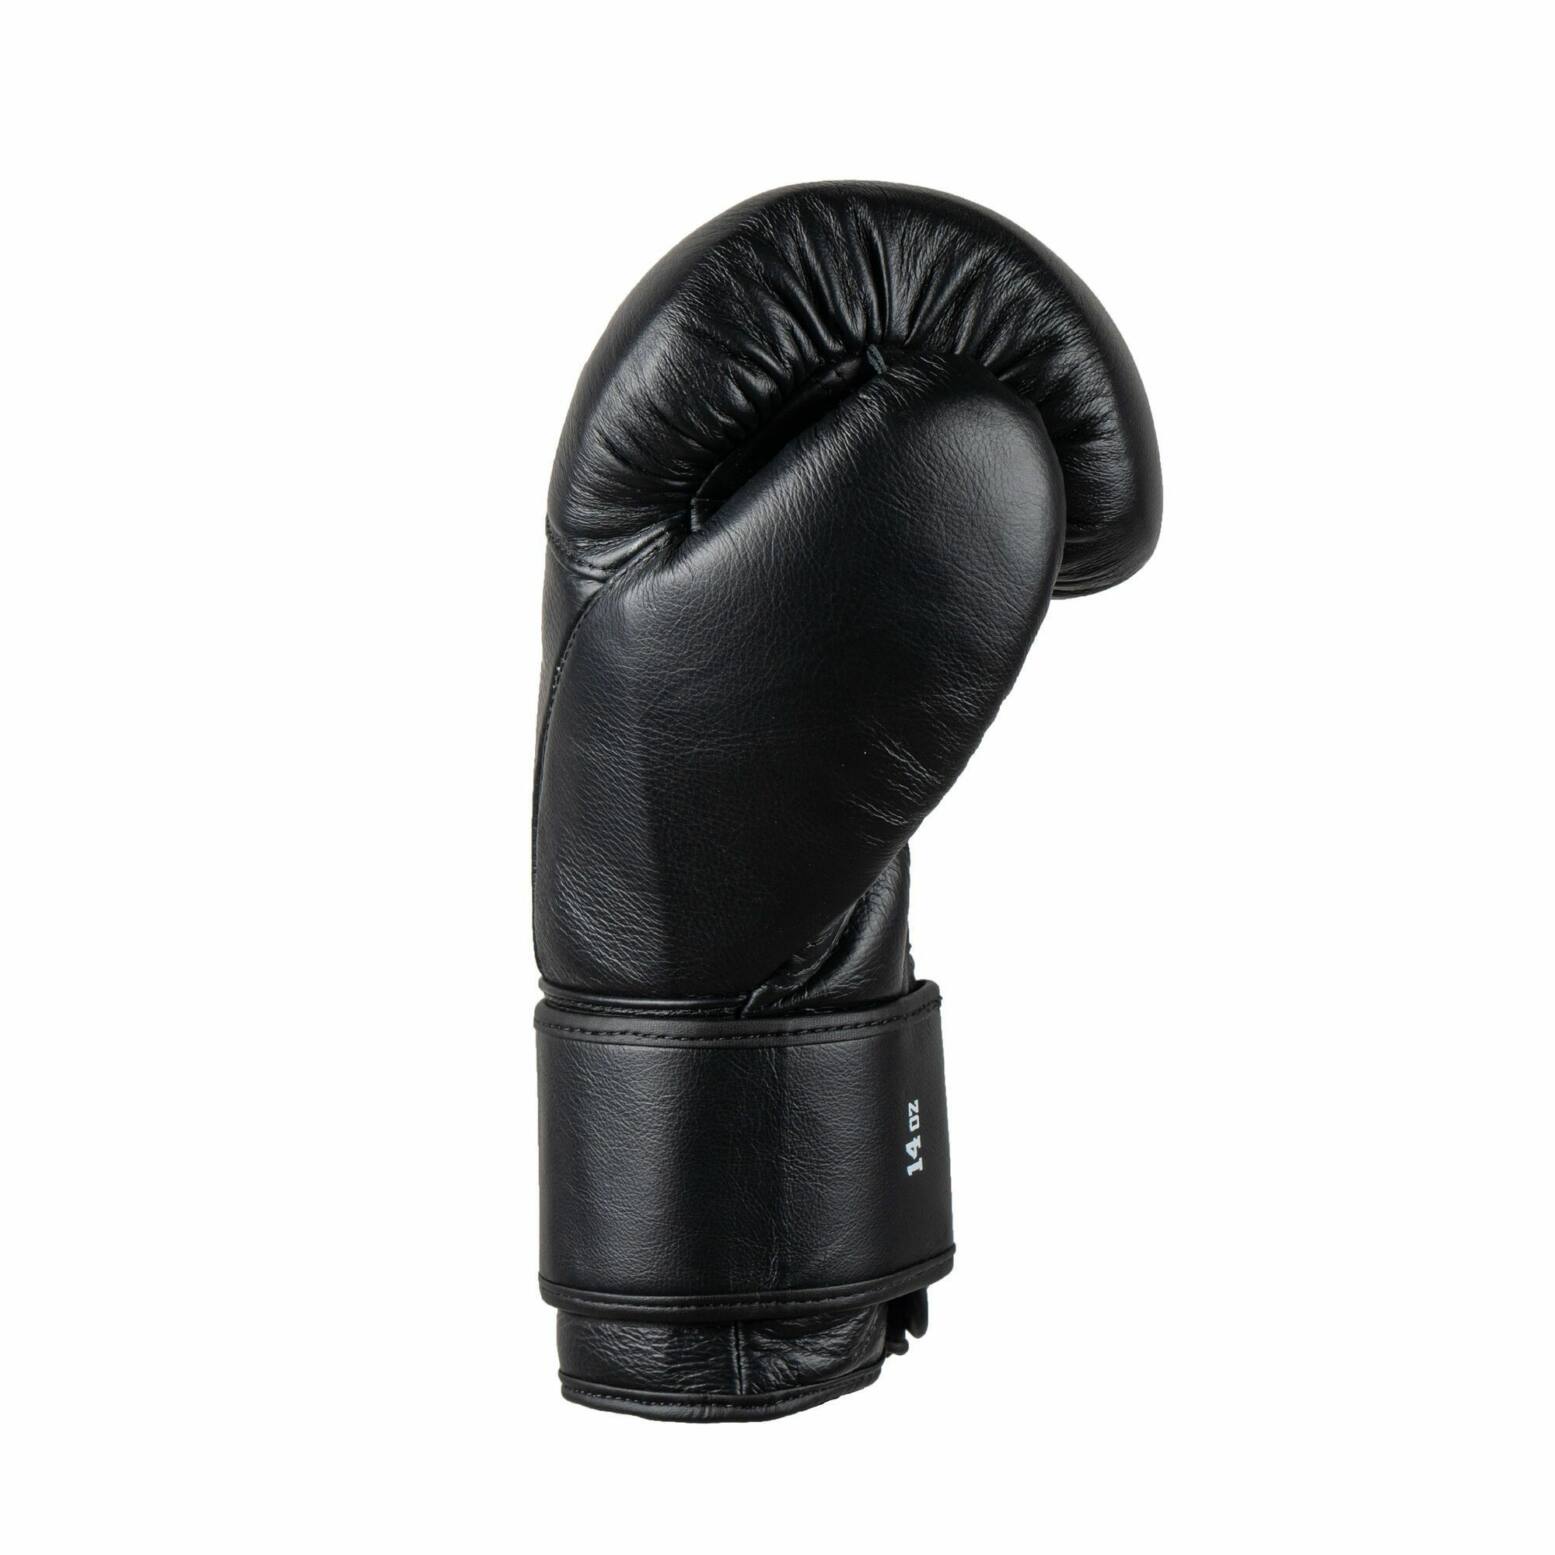 joya_eagle_boxing_gloves_black_1_